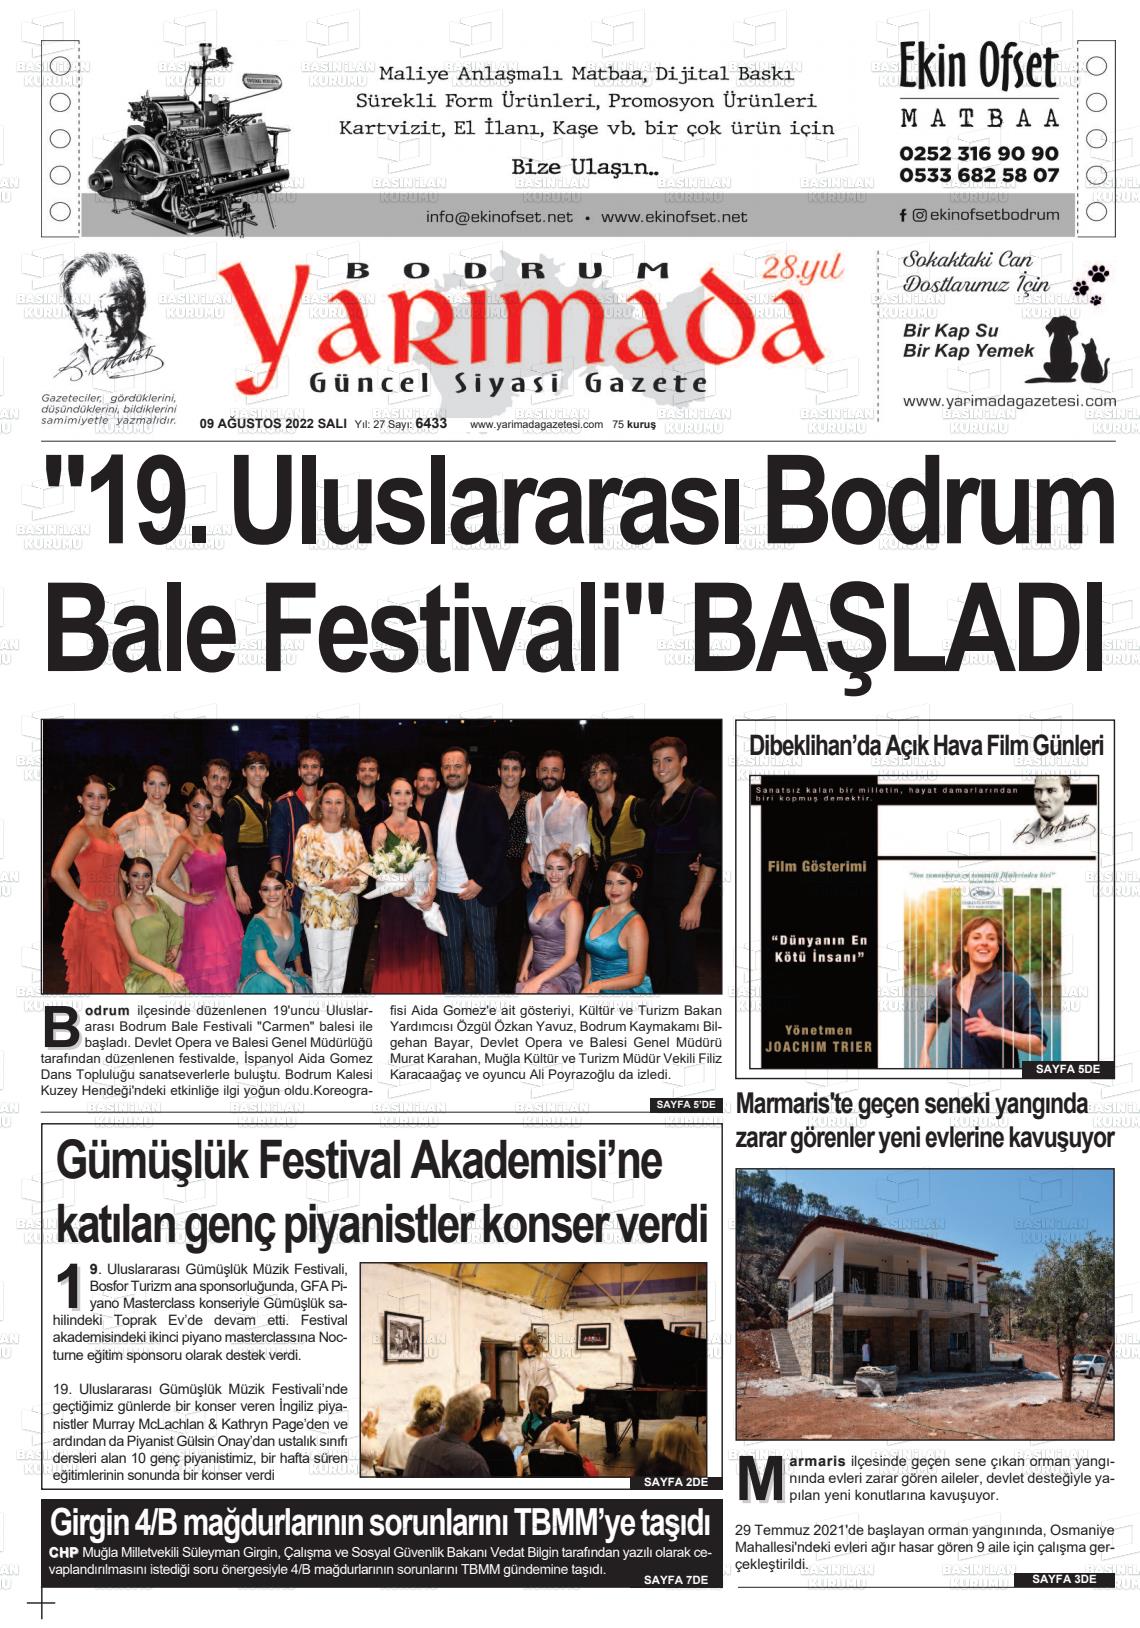 09 Ağustos 2022 Bodrum Yarimada Gazete Manşeti